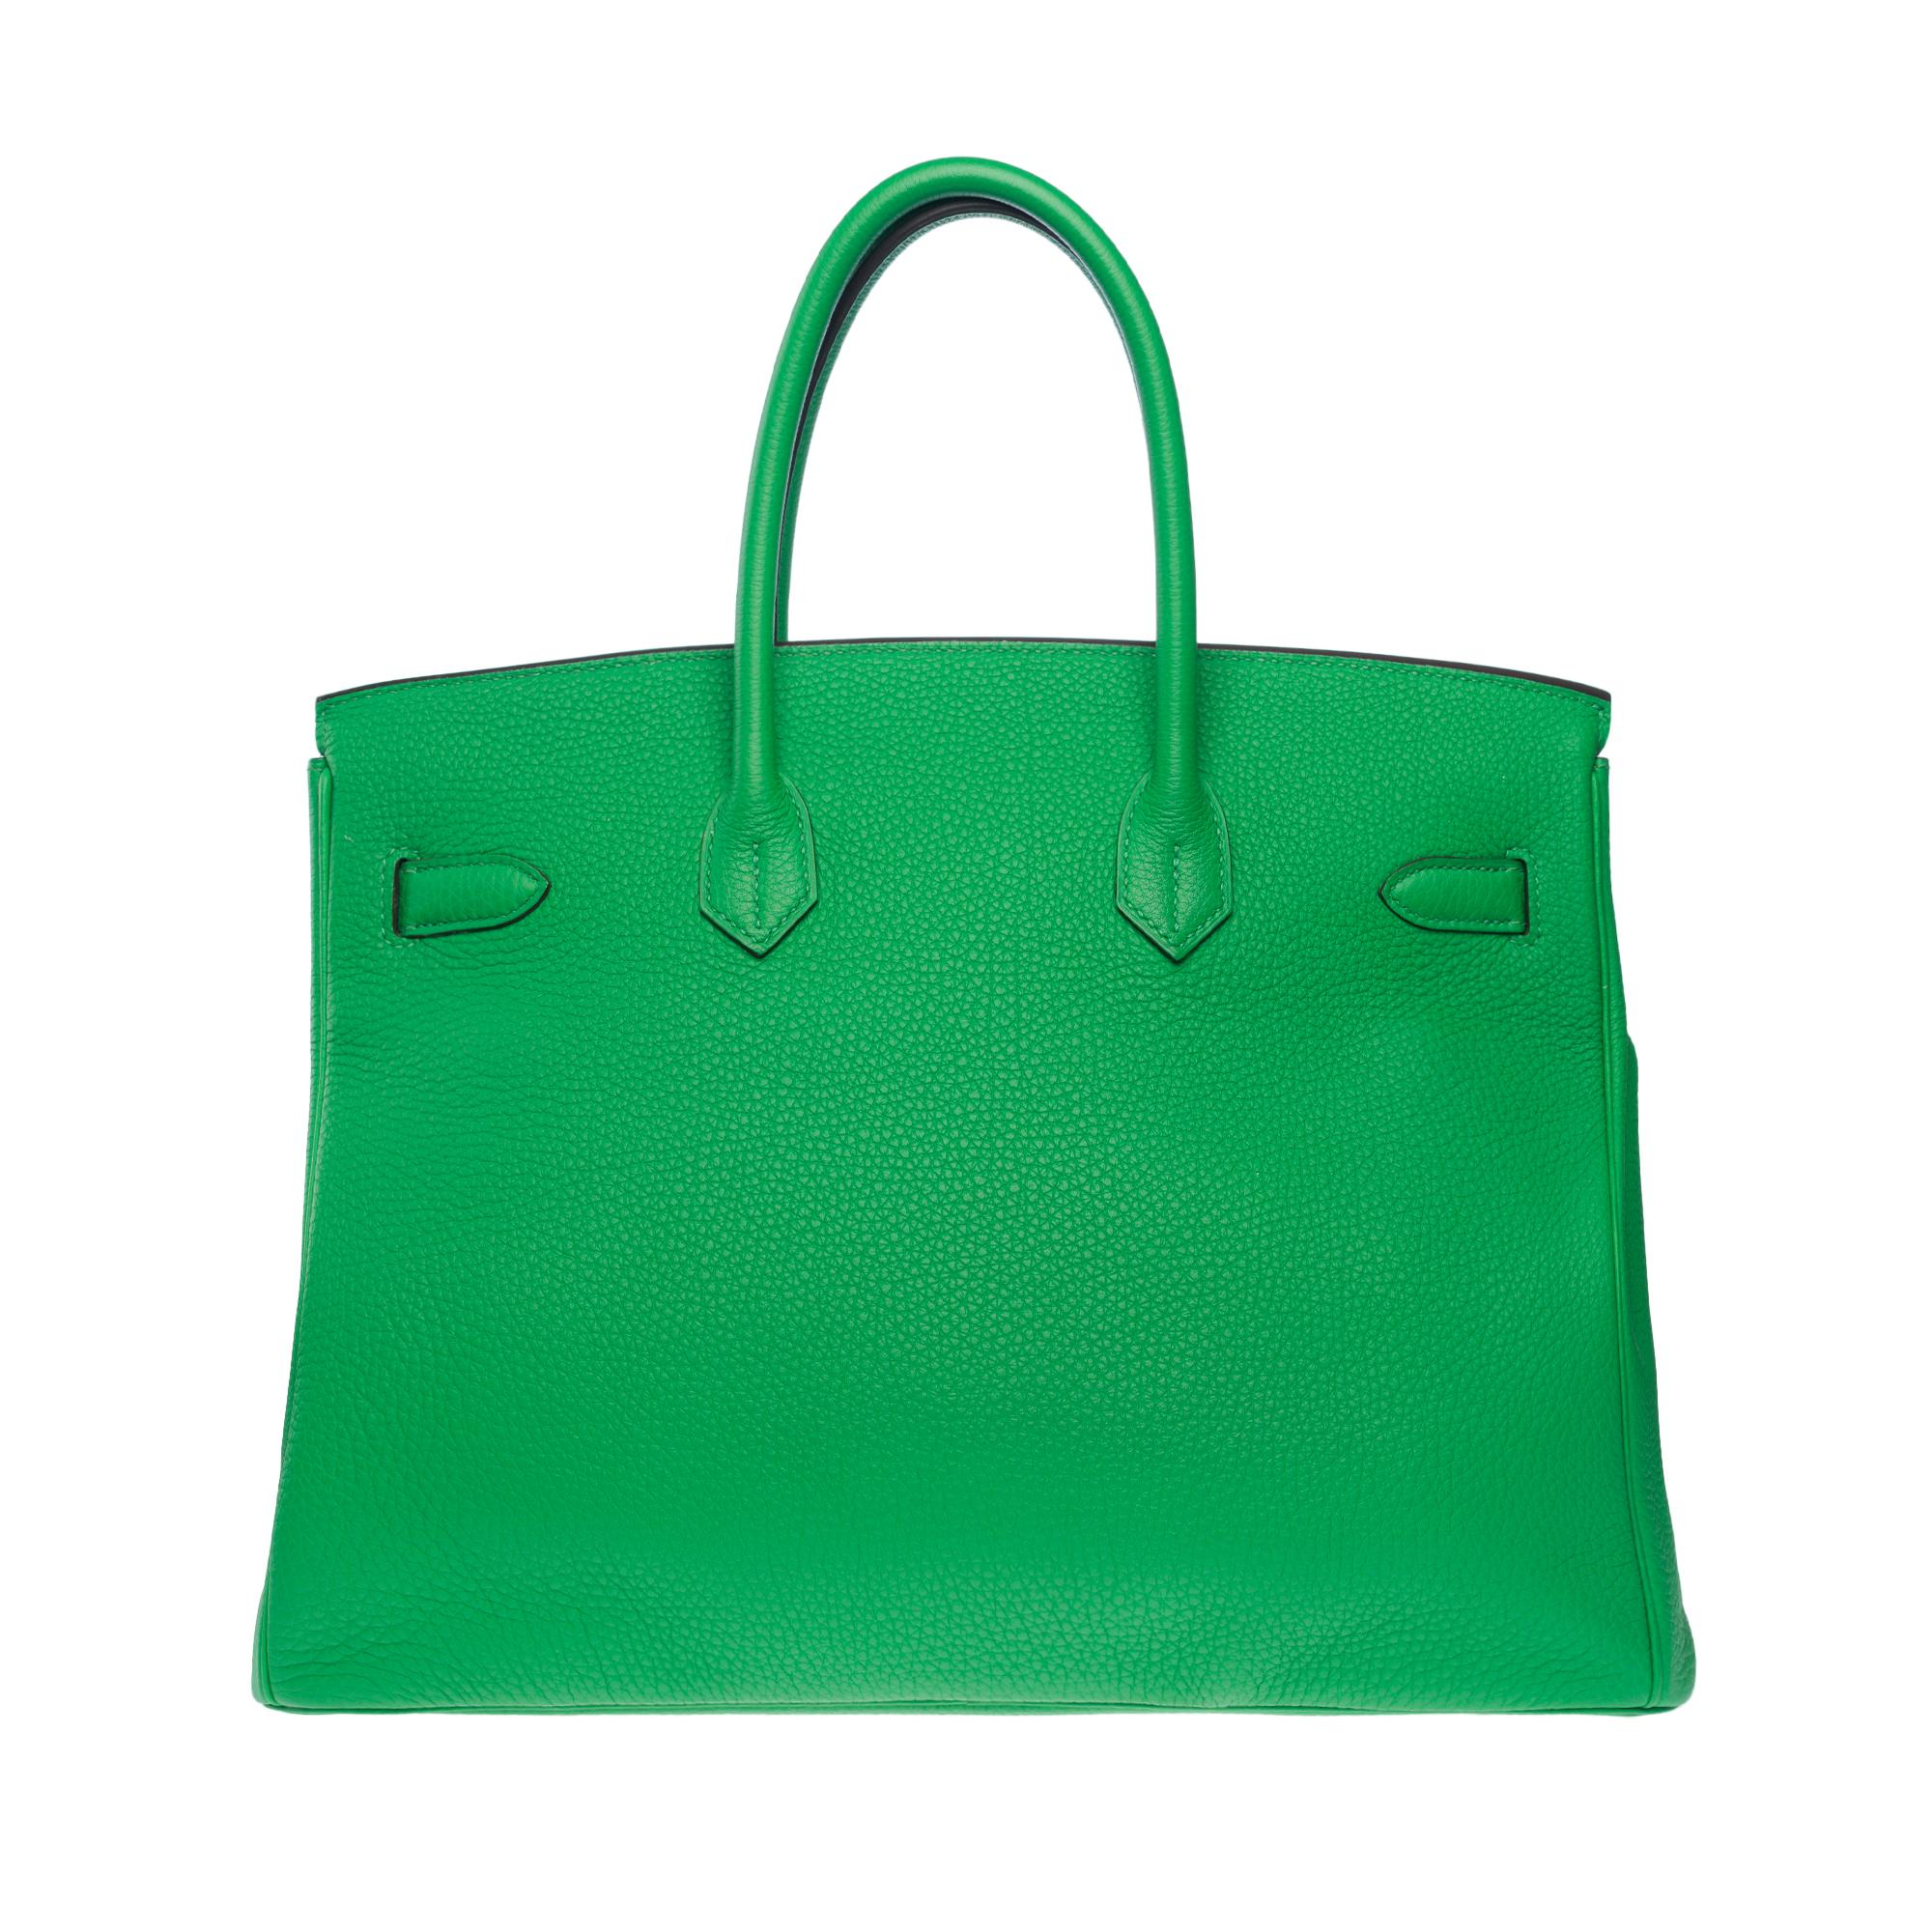 Fantastic Hermès Birkin 35 handbag in Green Bamboo Togo leather, SHW For Sale 1